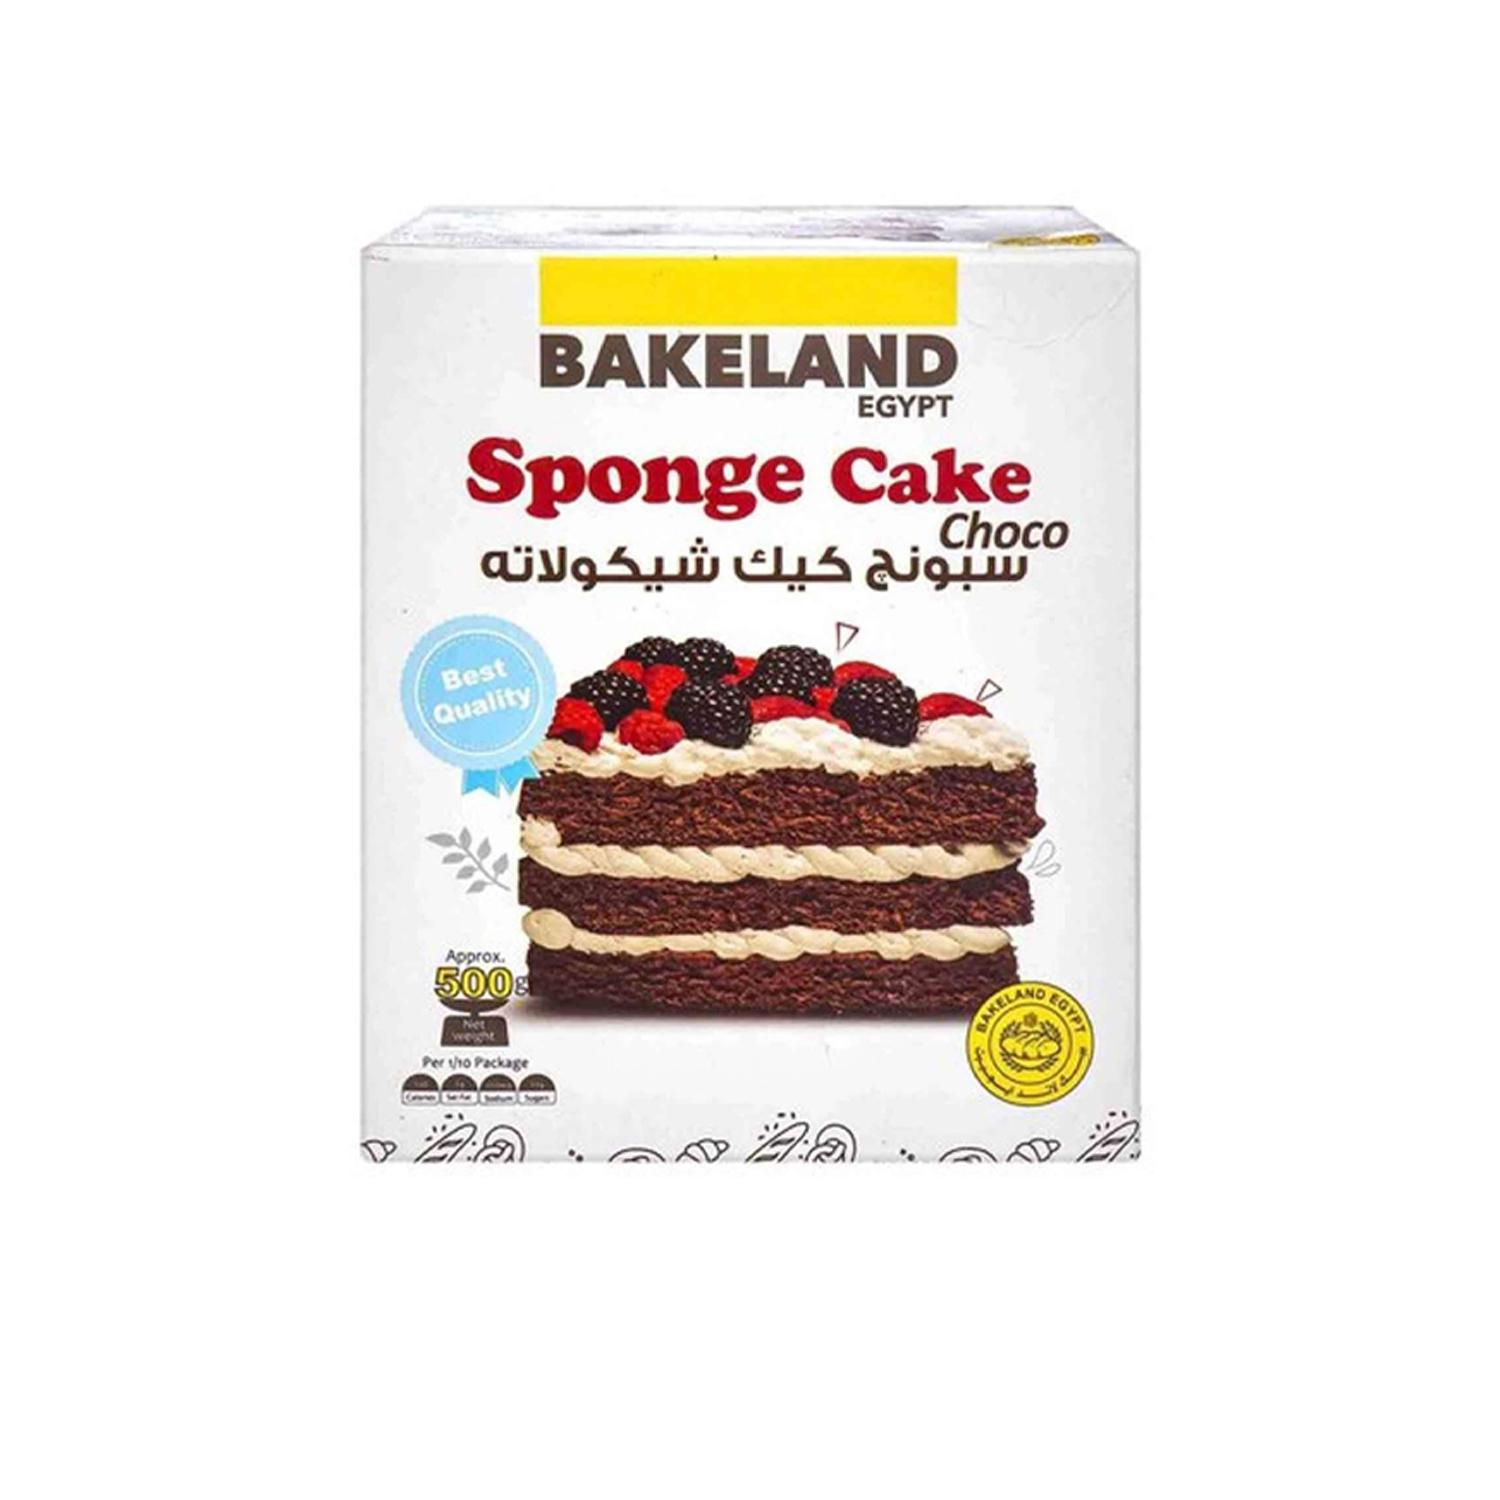 BAKELAND BROWNIE CHOCOLATE SPONGE CAKE MIX 500GMS